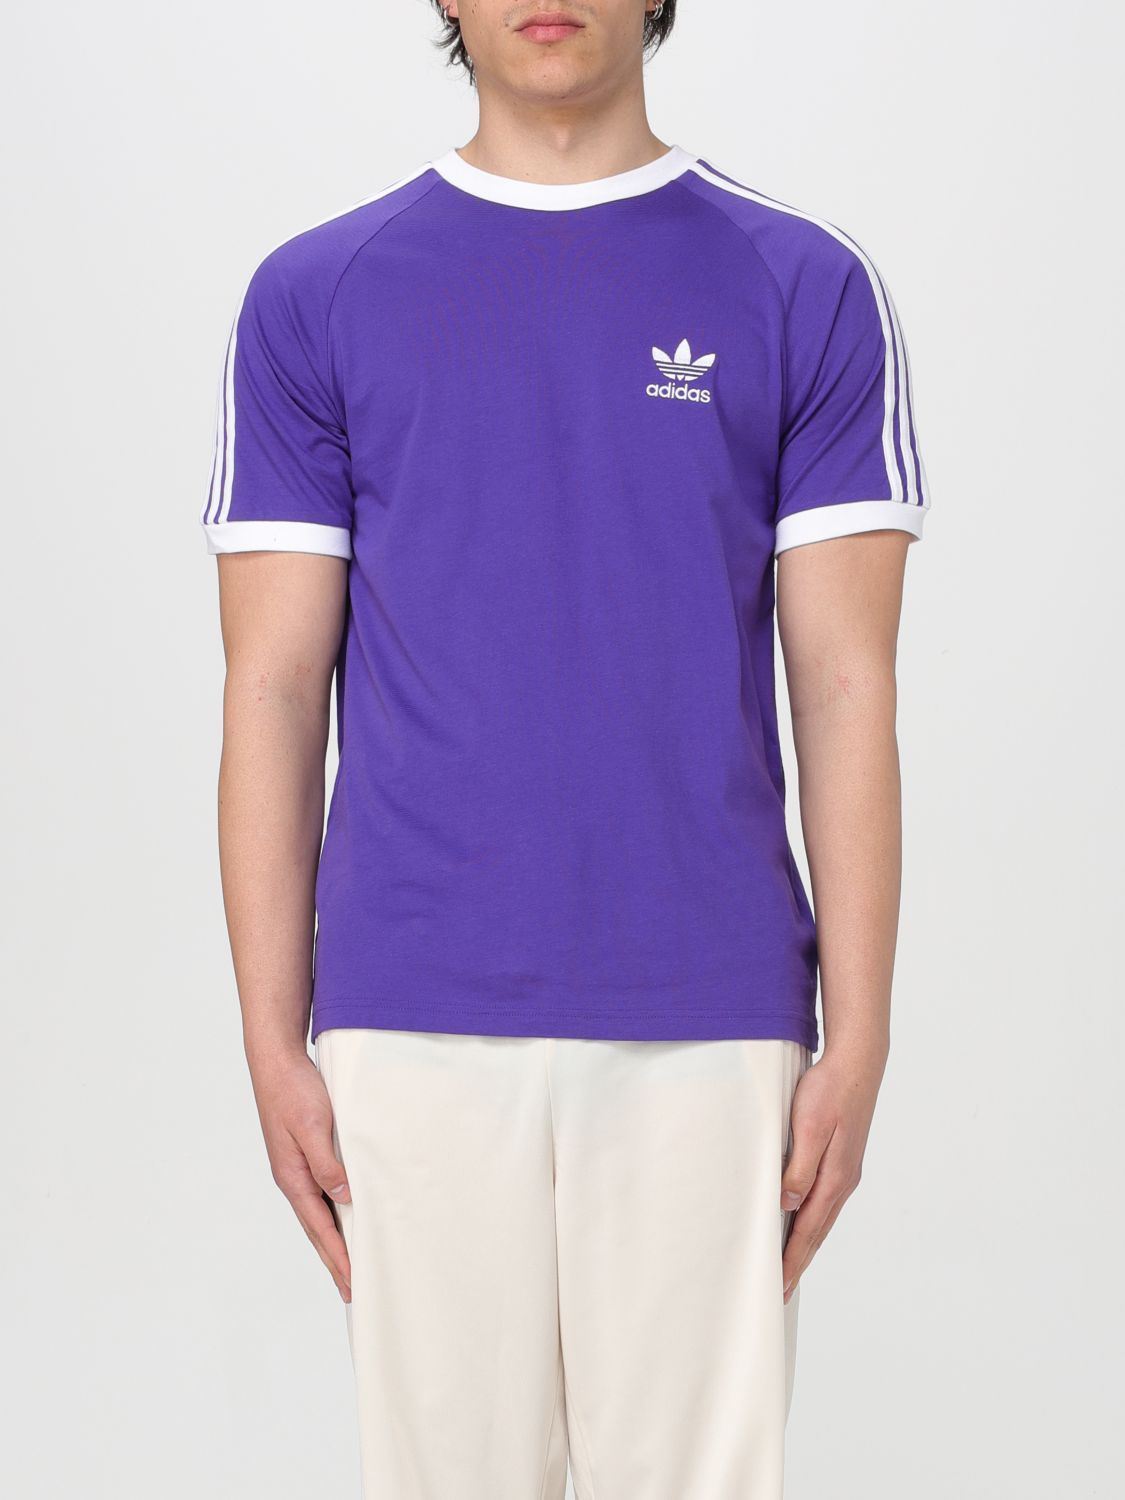 Adidas Originals T-Shirt ADIDAS ORIGINALS Men colour Violet